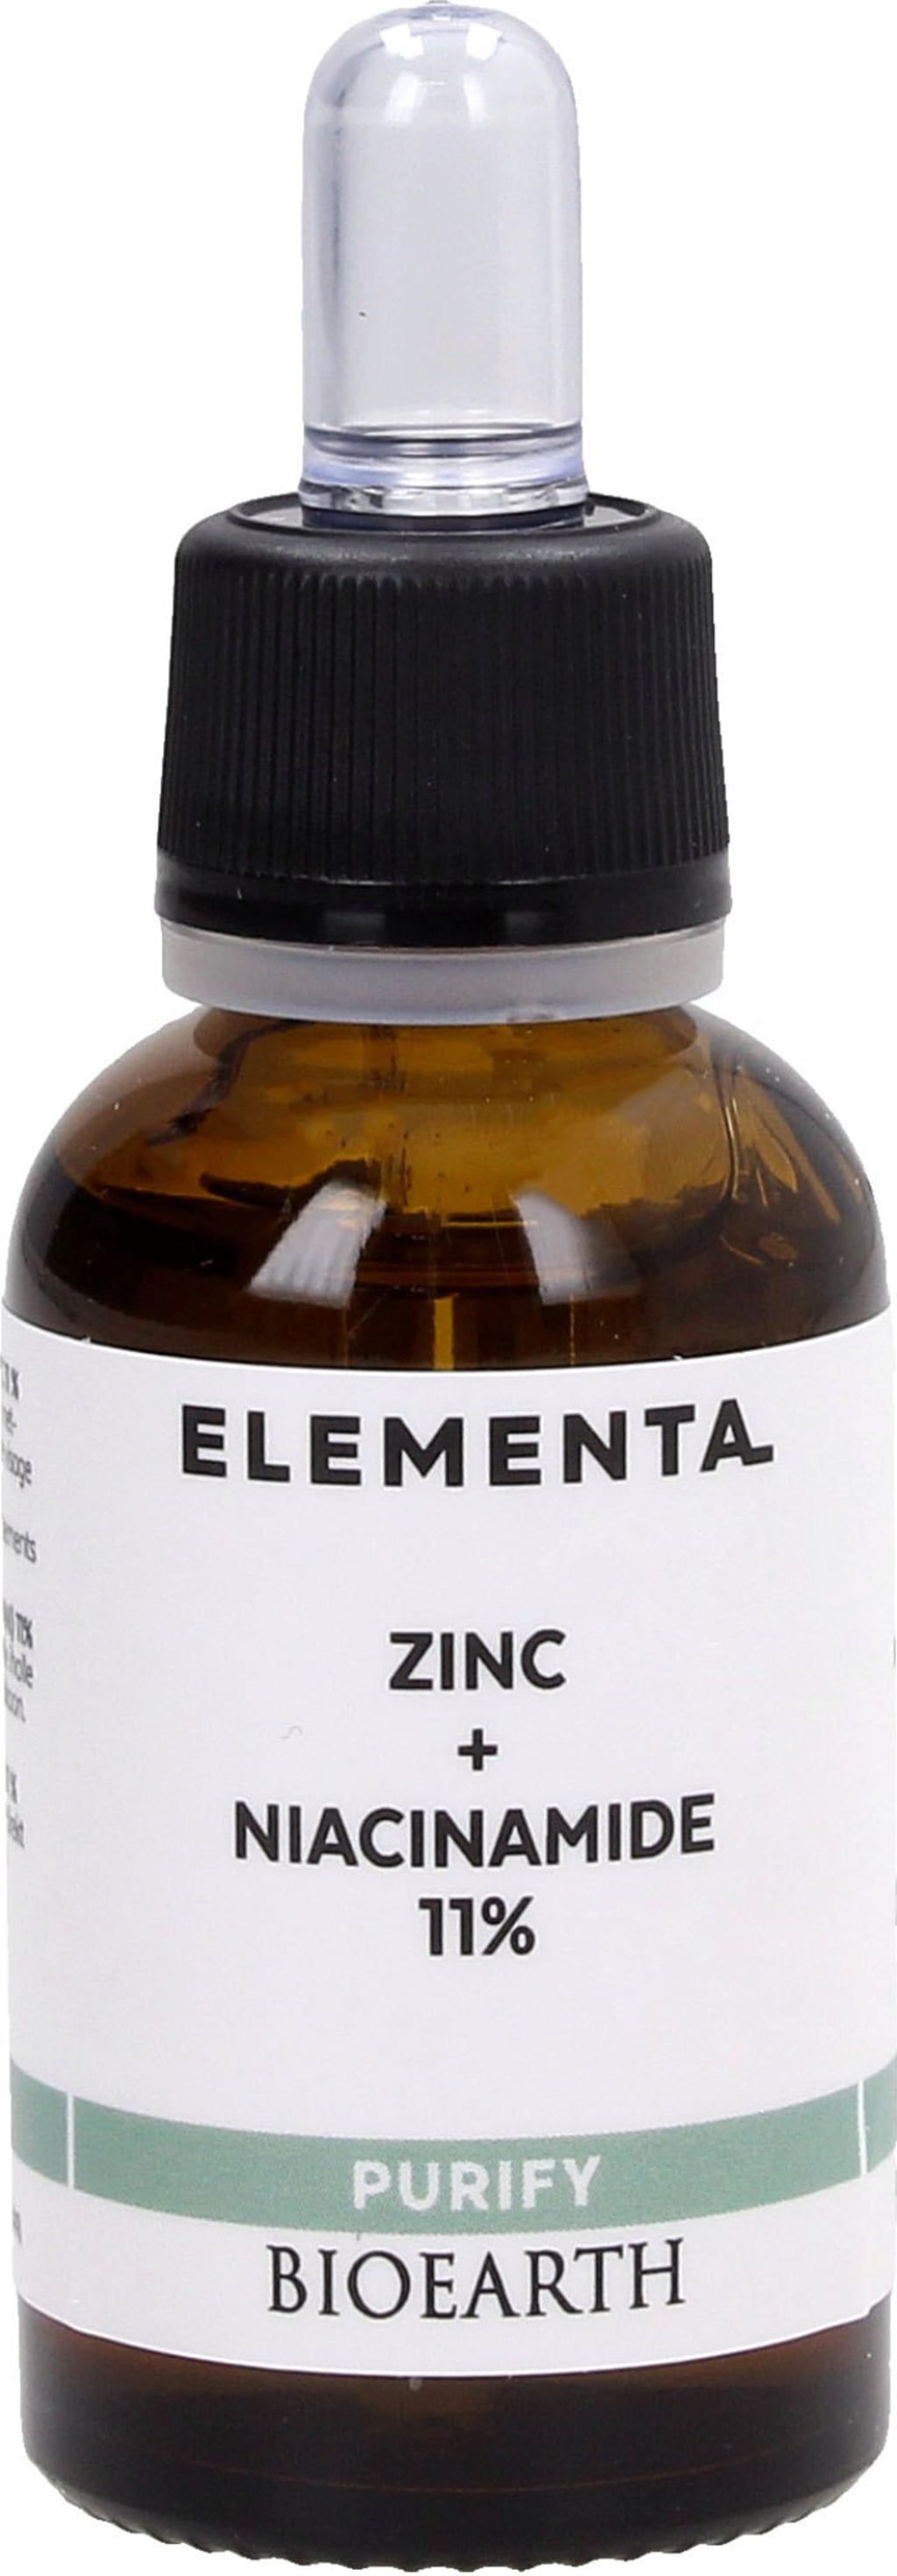 bioearth ELEMENTA PURIFY Zinco + Niacinamide 11% - 30 ml